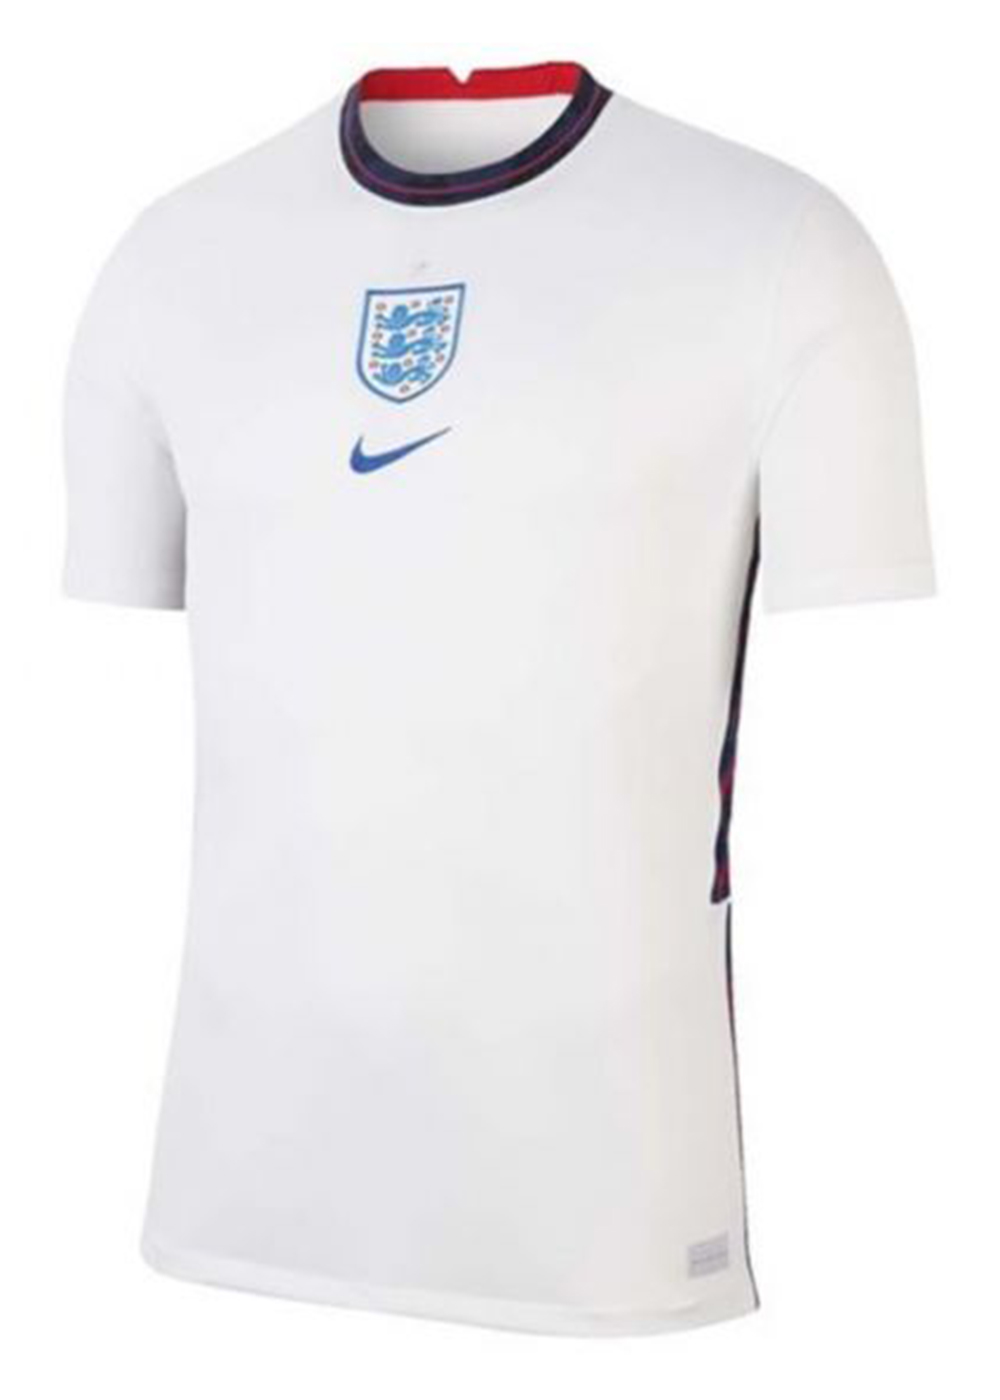 euro 2020 england shirt